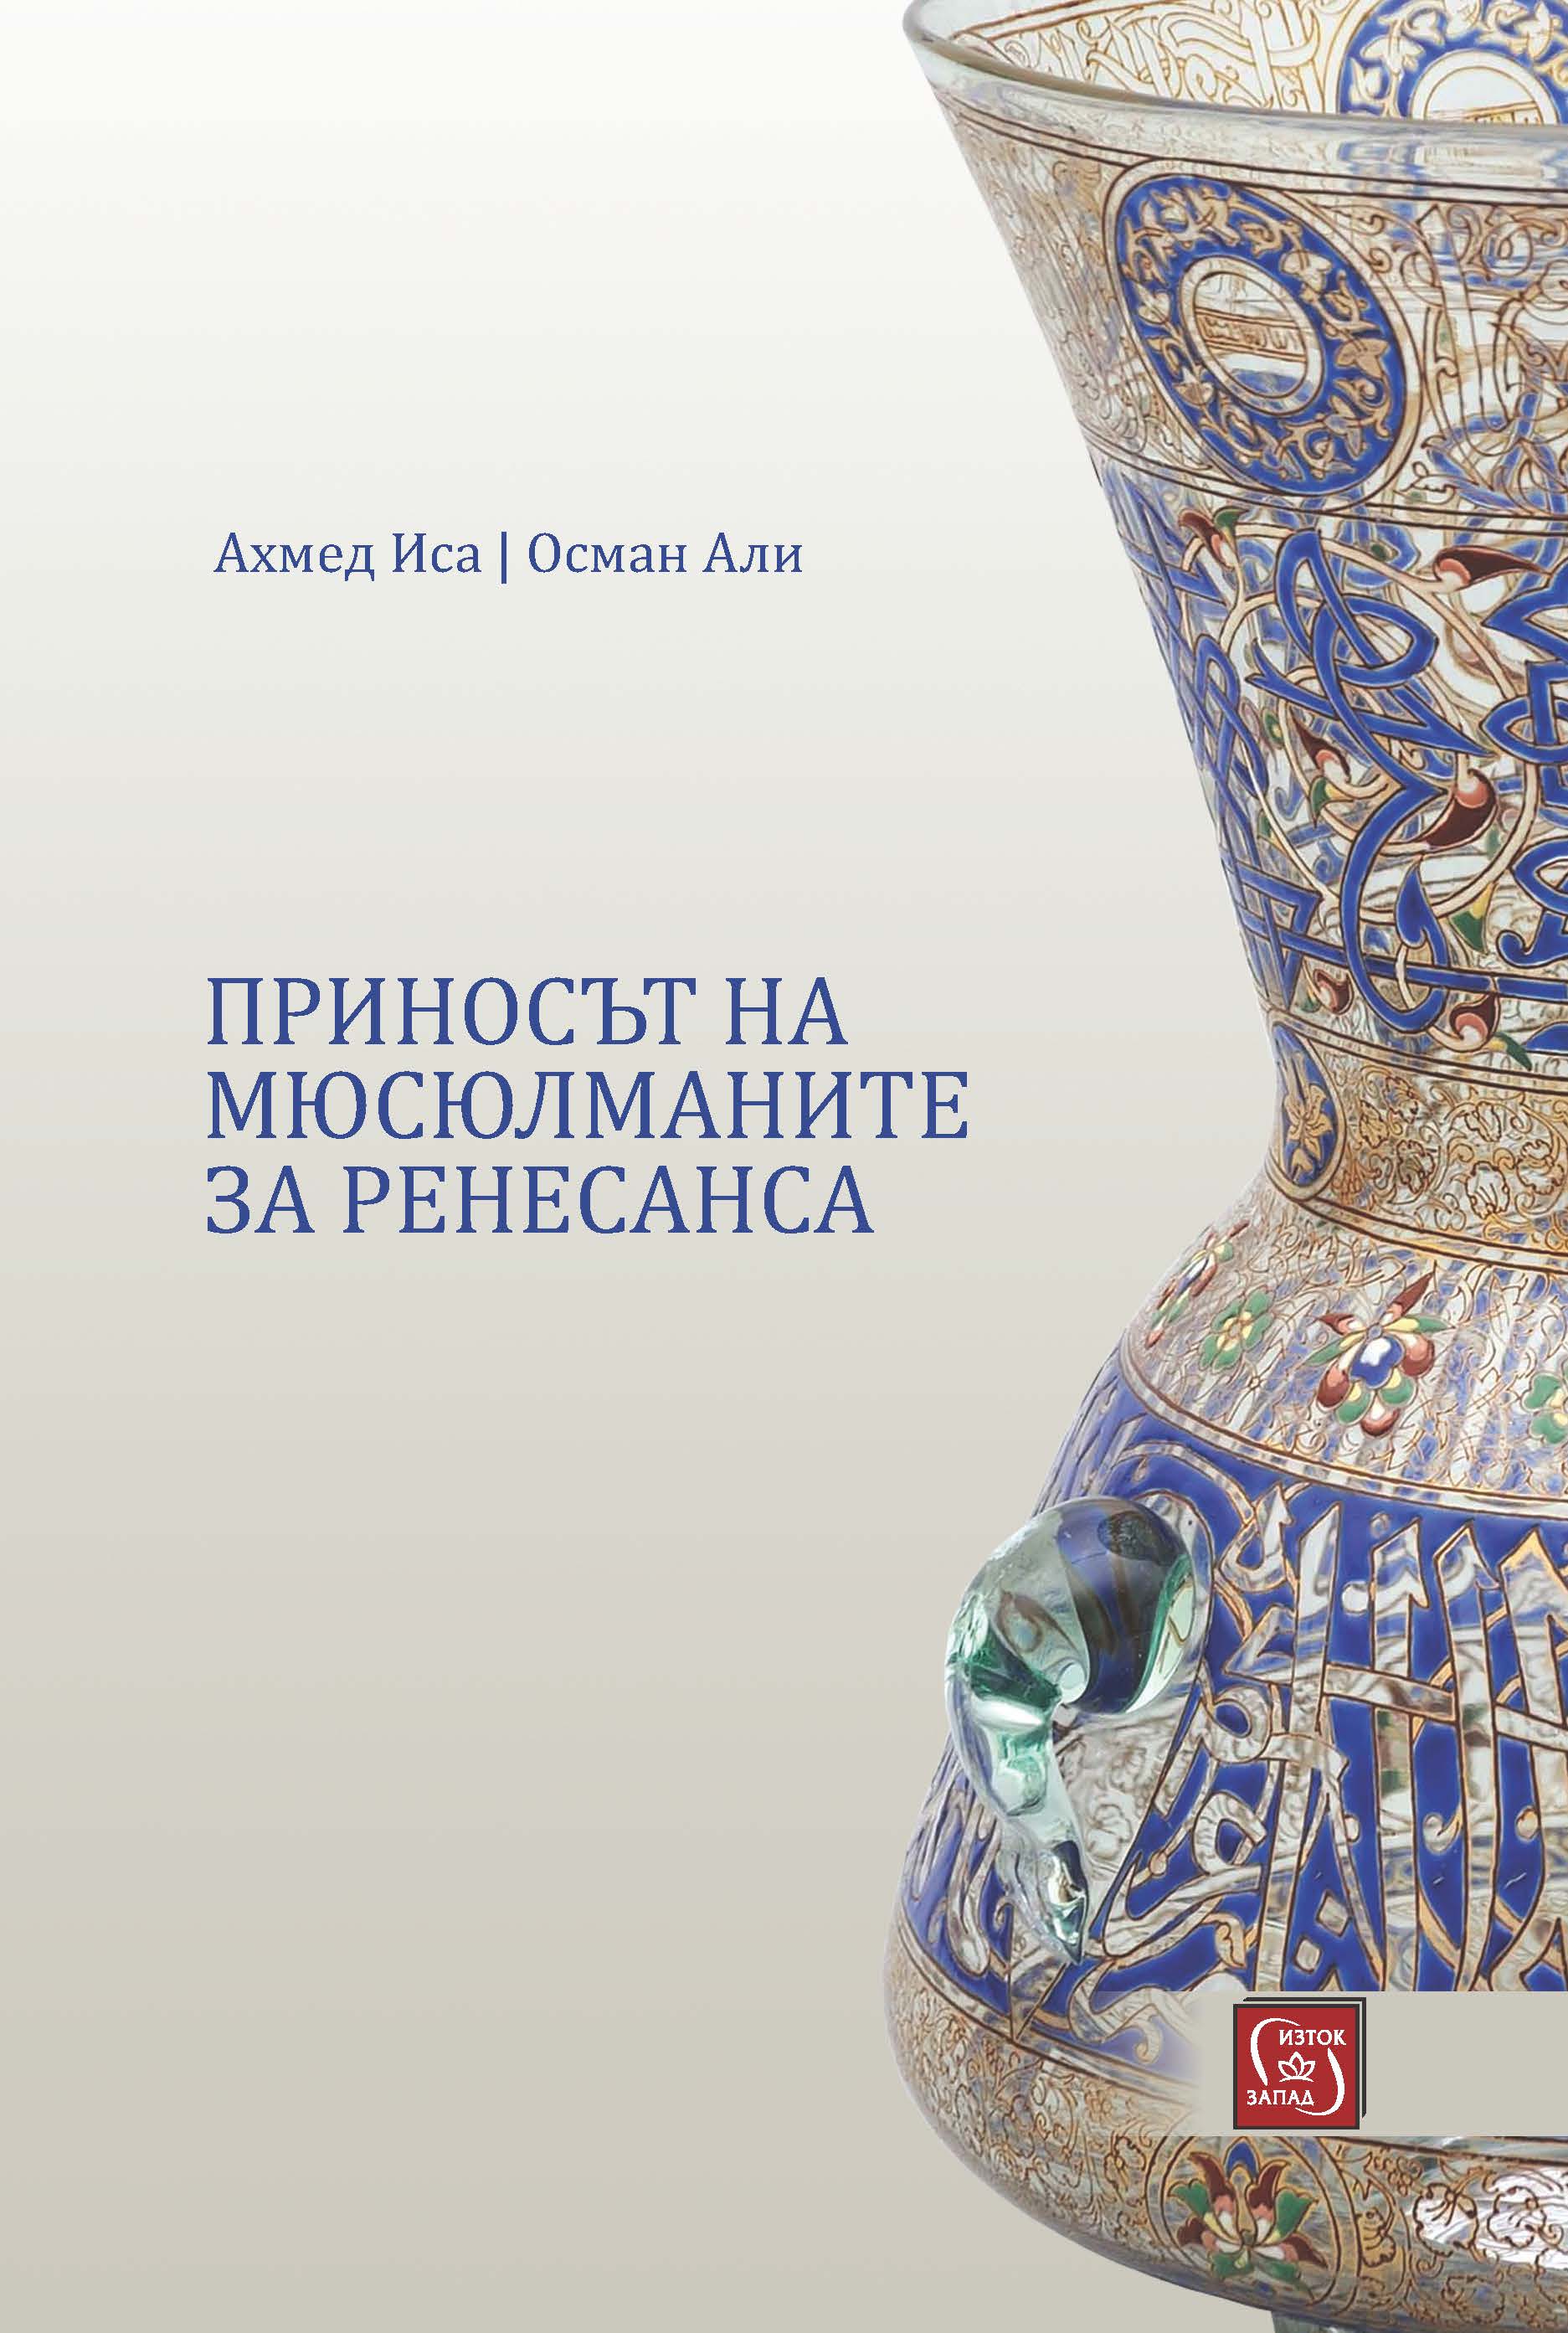 Bulgarian: Studies in Islamic Civilization: The Muslim Contribution to the Renaissance